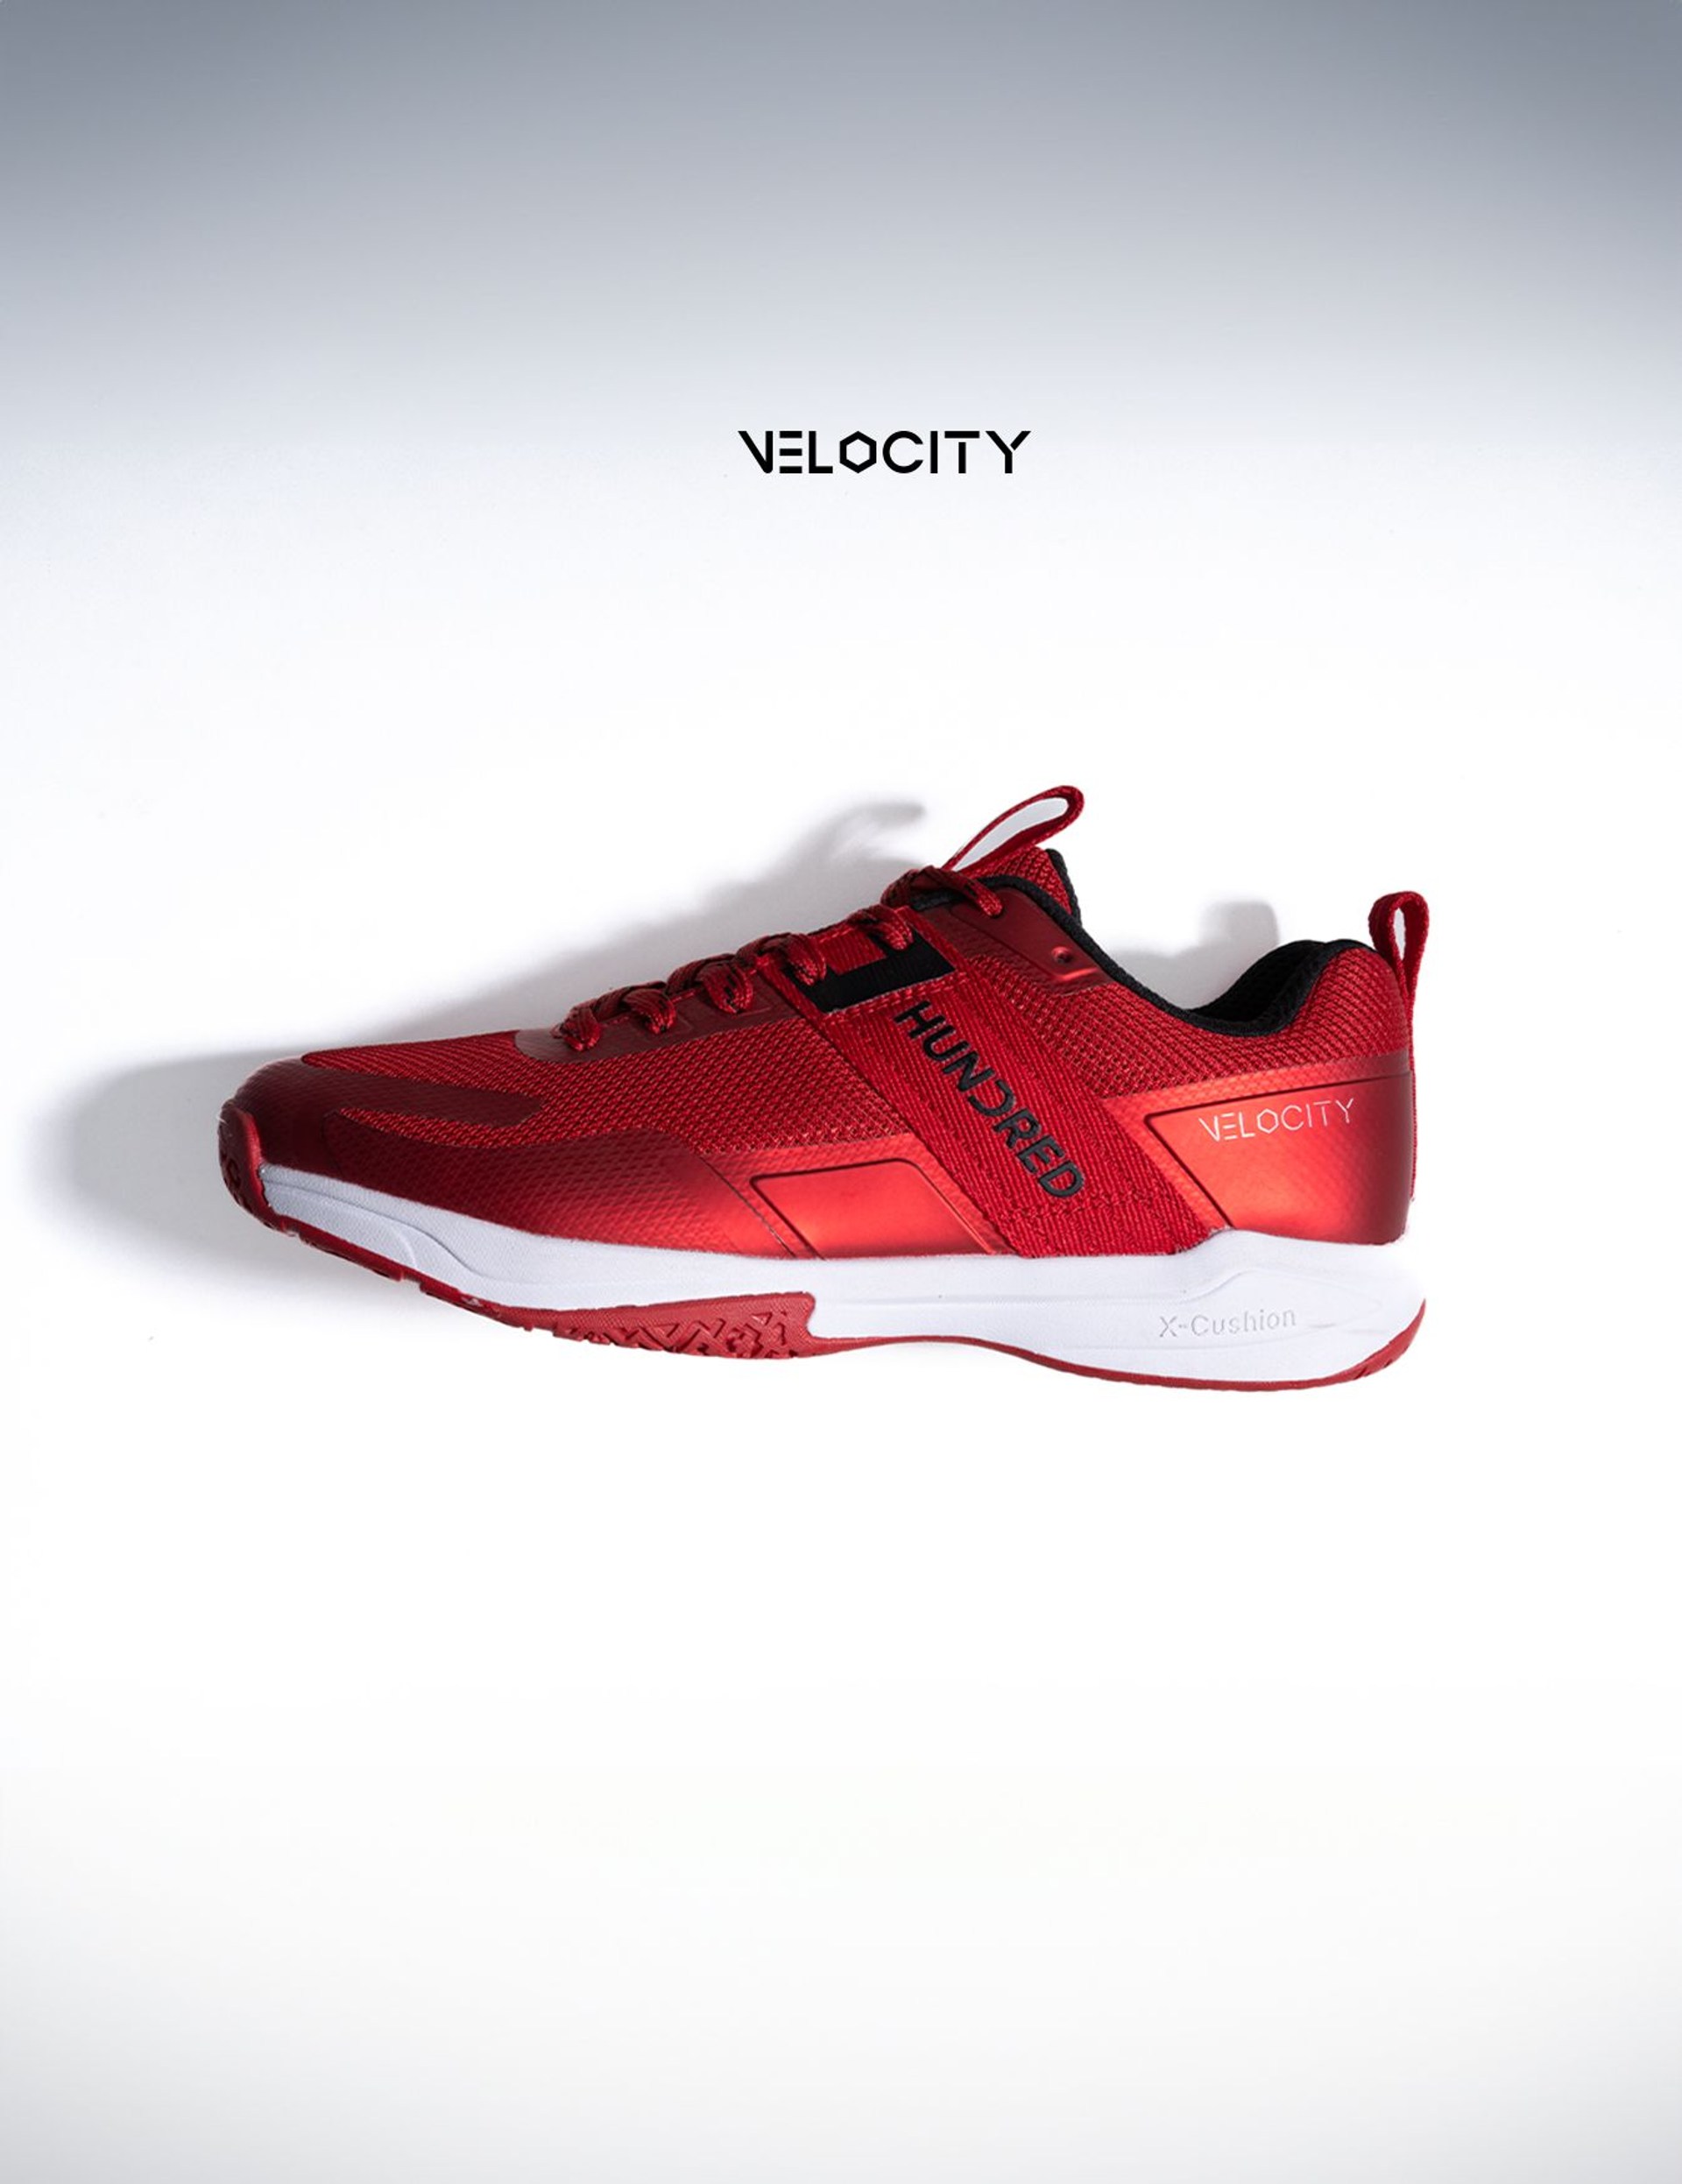 Velocity Shoes